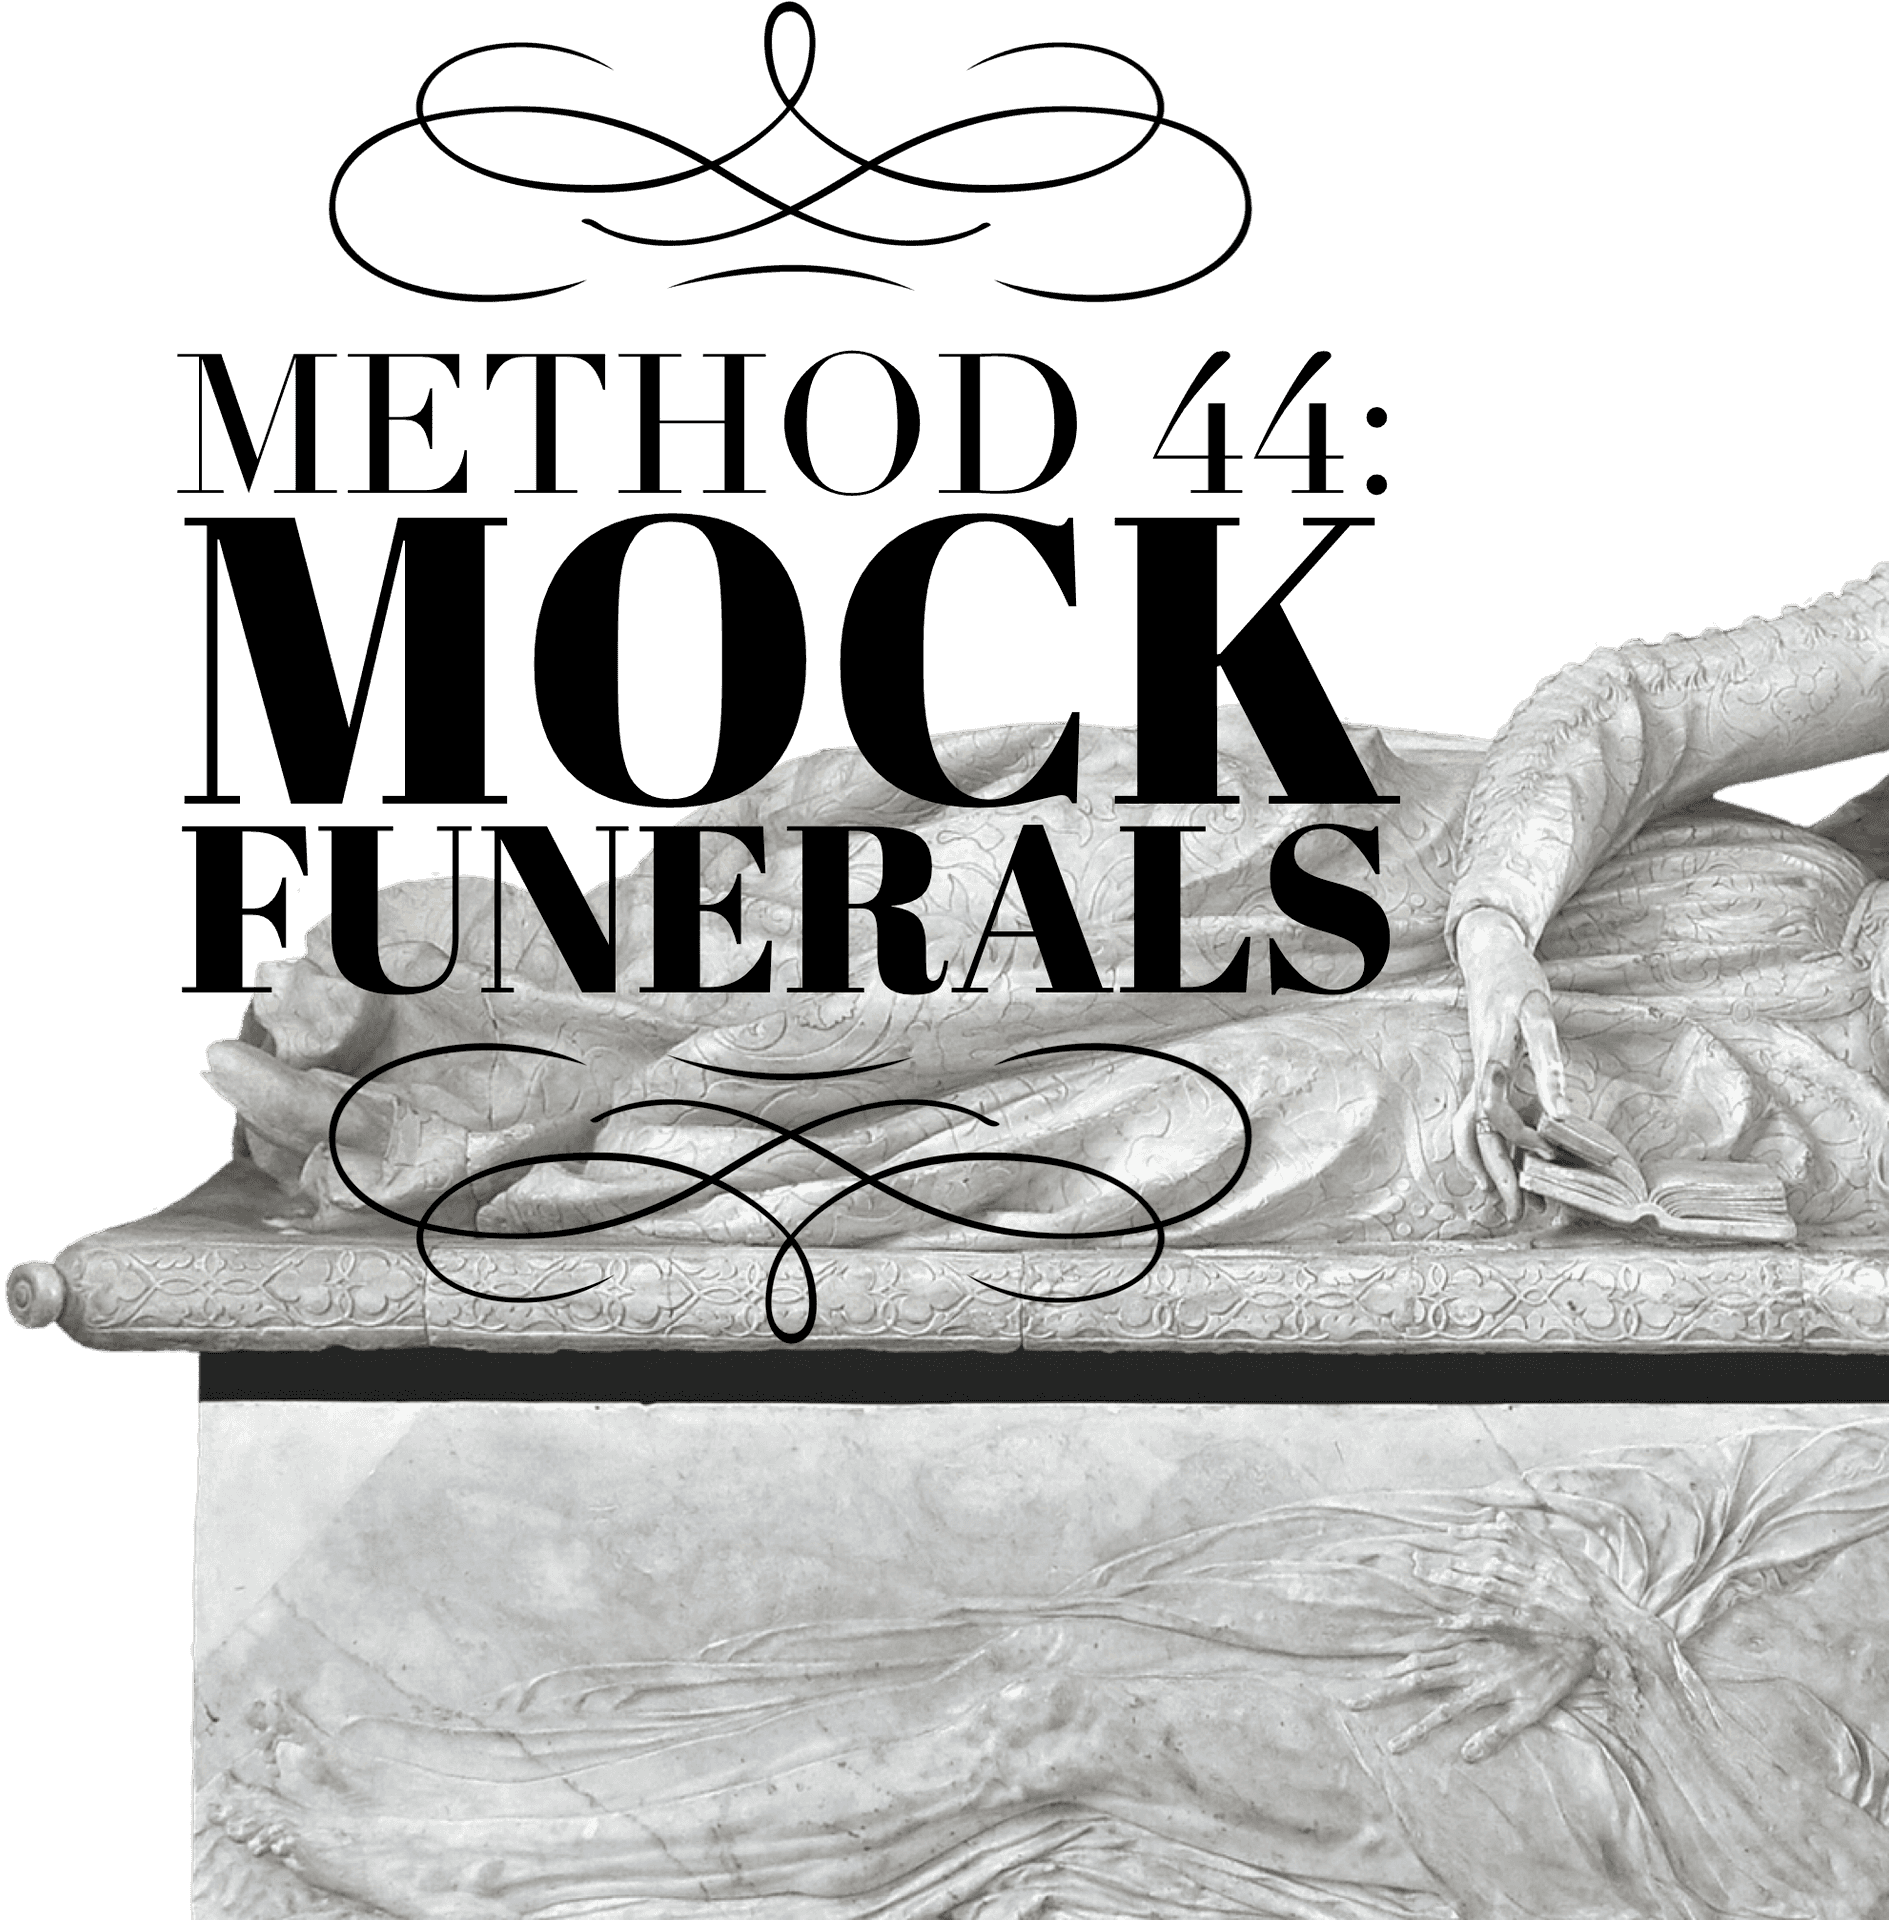 Mock Funeral Method44 PNG image